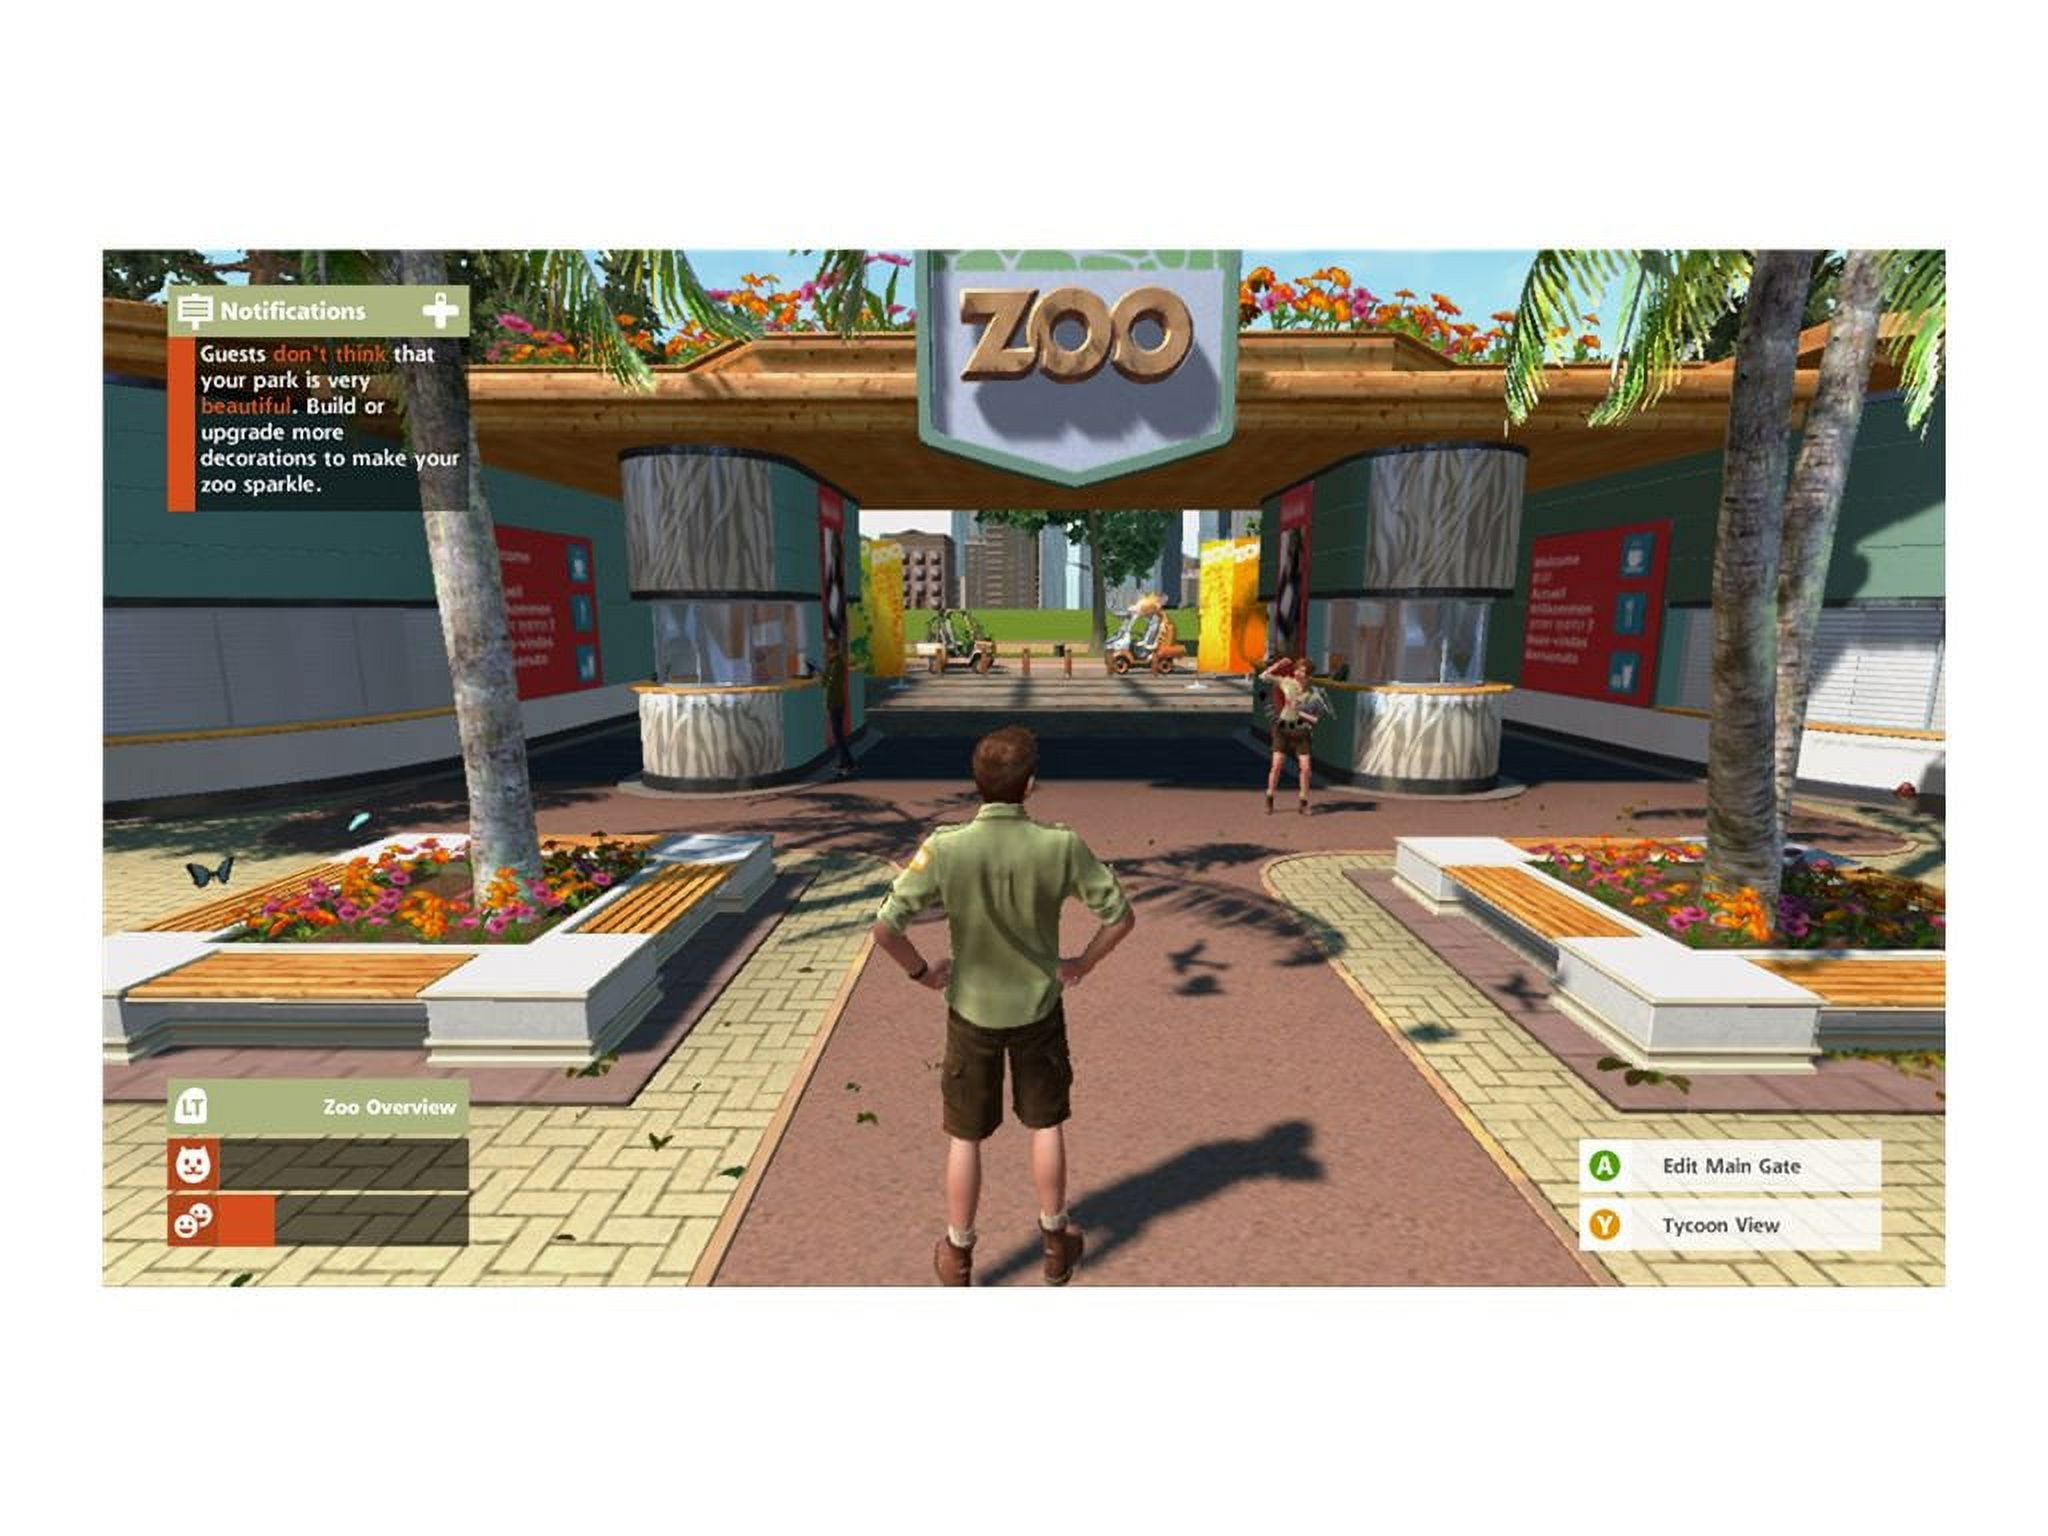 ZOO TYCOON - Microsoft Xbox 360 - PAL - NO MANUAL Free Postage $33.95 -  PicClick AU